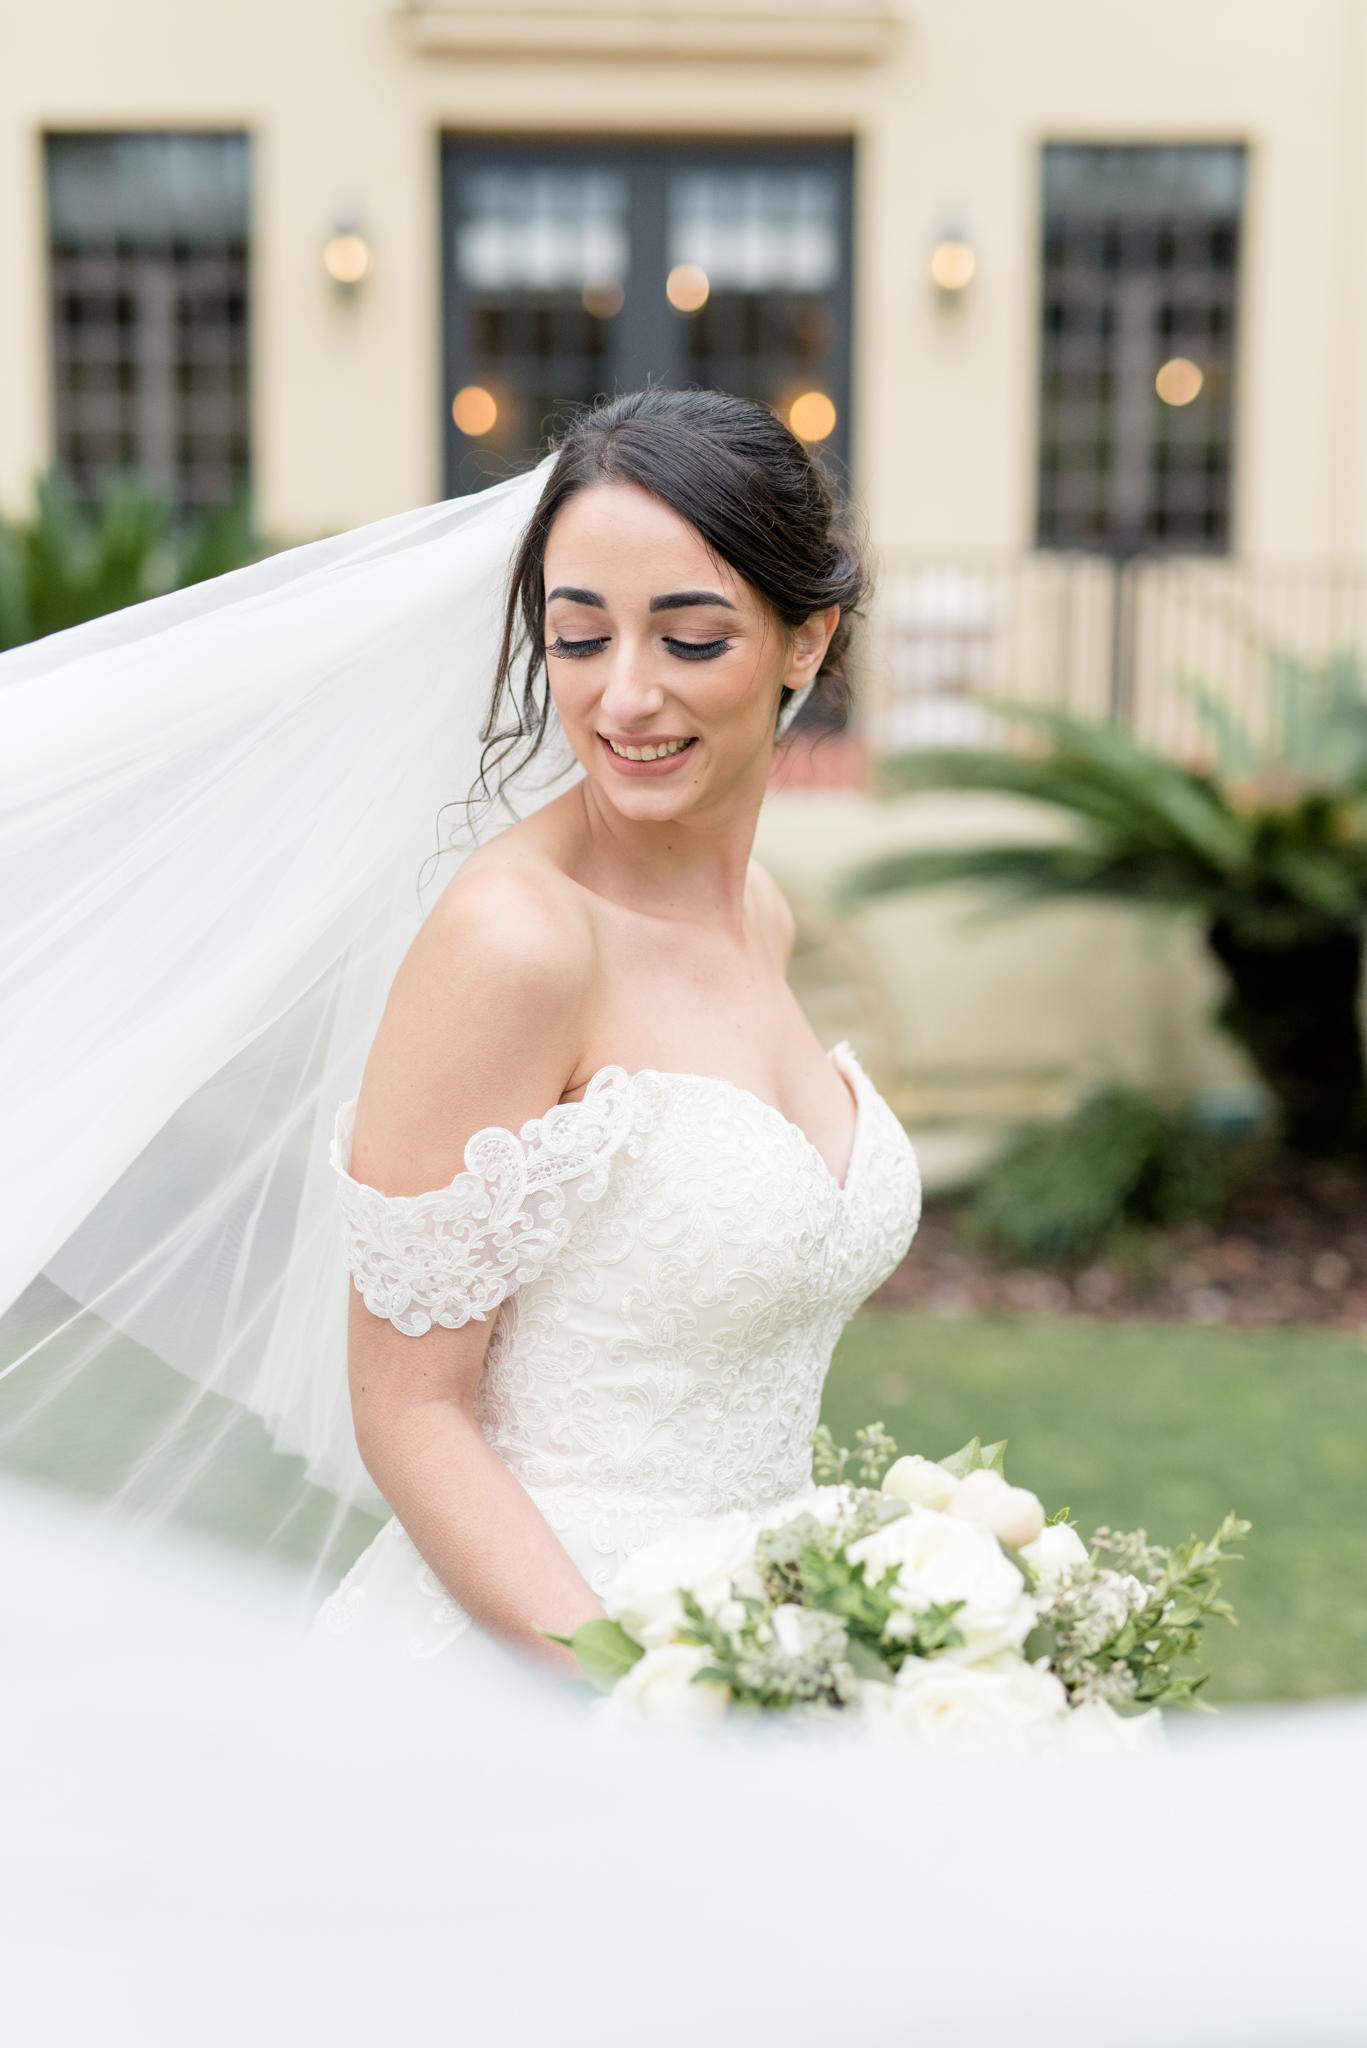 Bride looks over shoulder while veil blows.